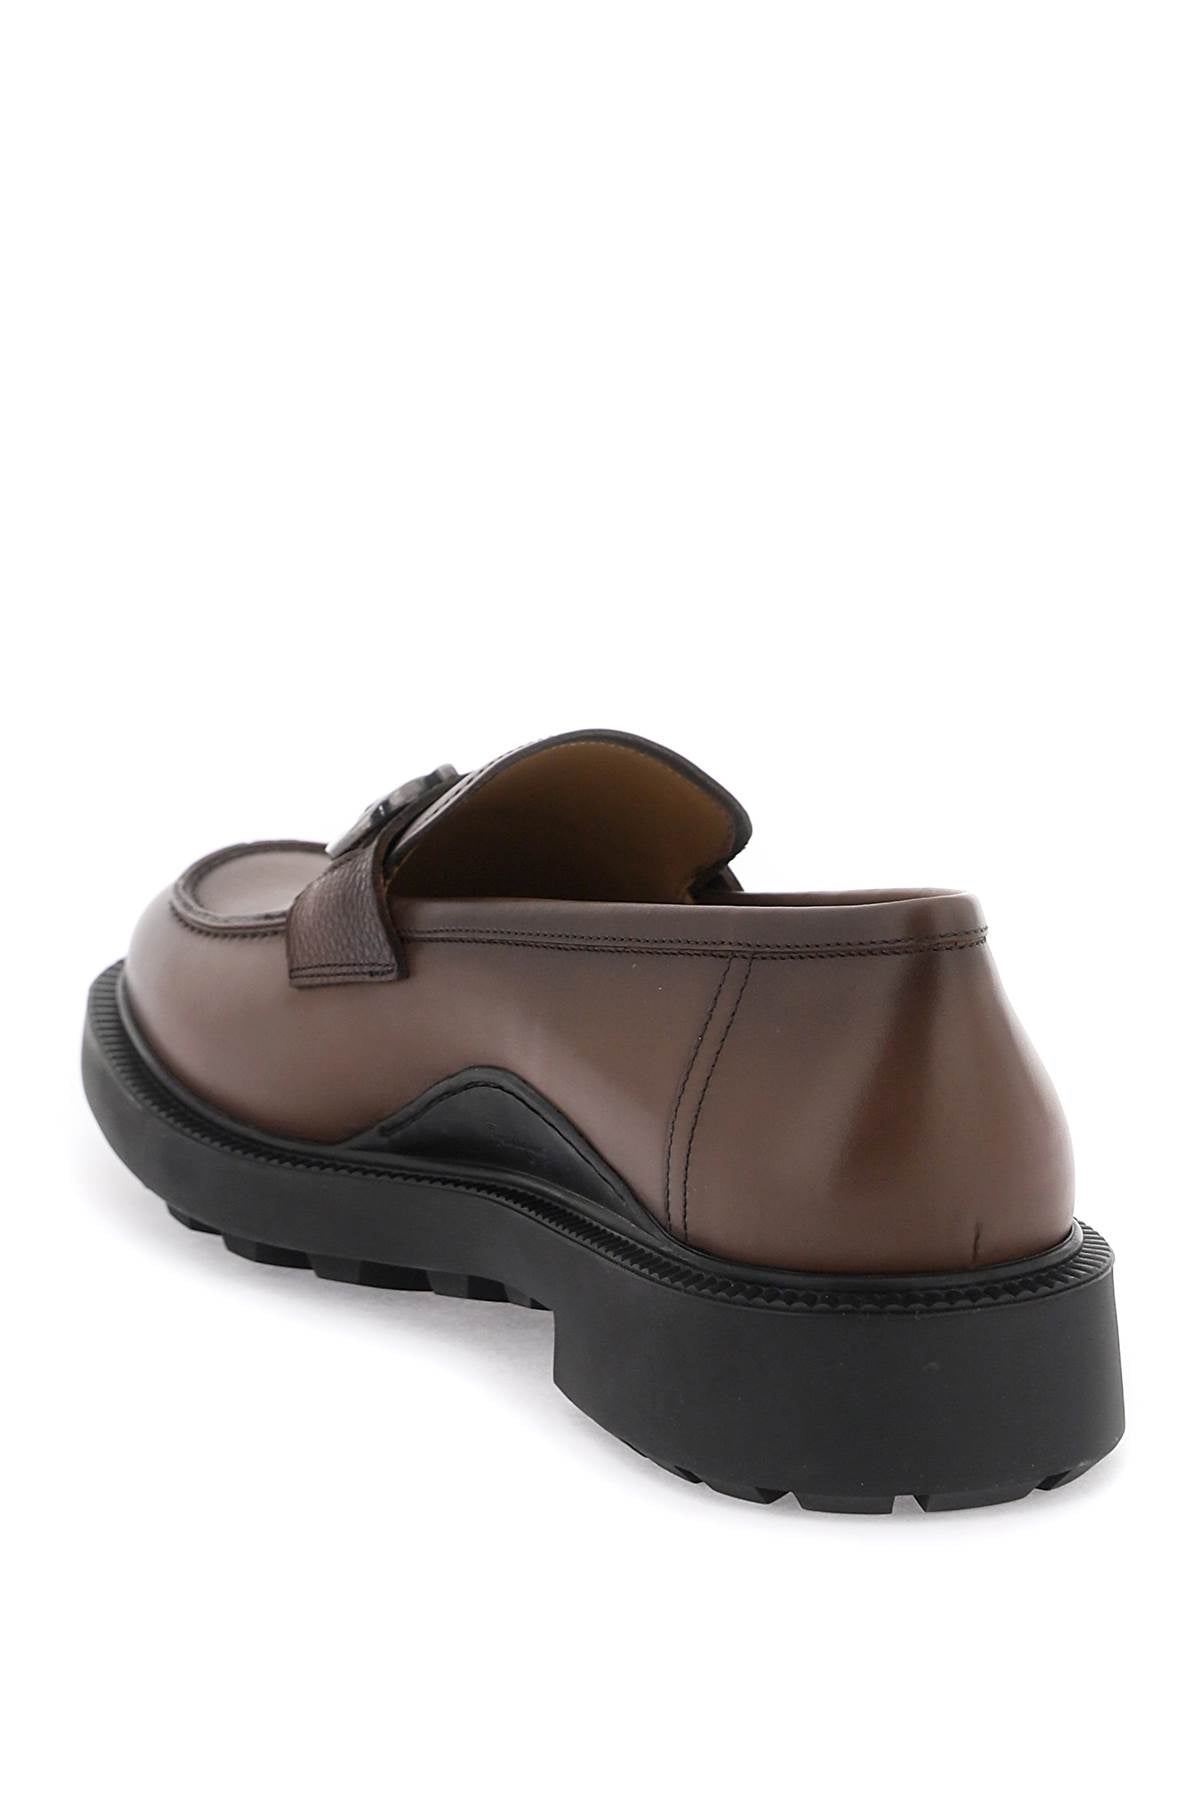 FERRAGAMO Stylish Gancini Hook Brown Loafers for Men